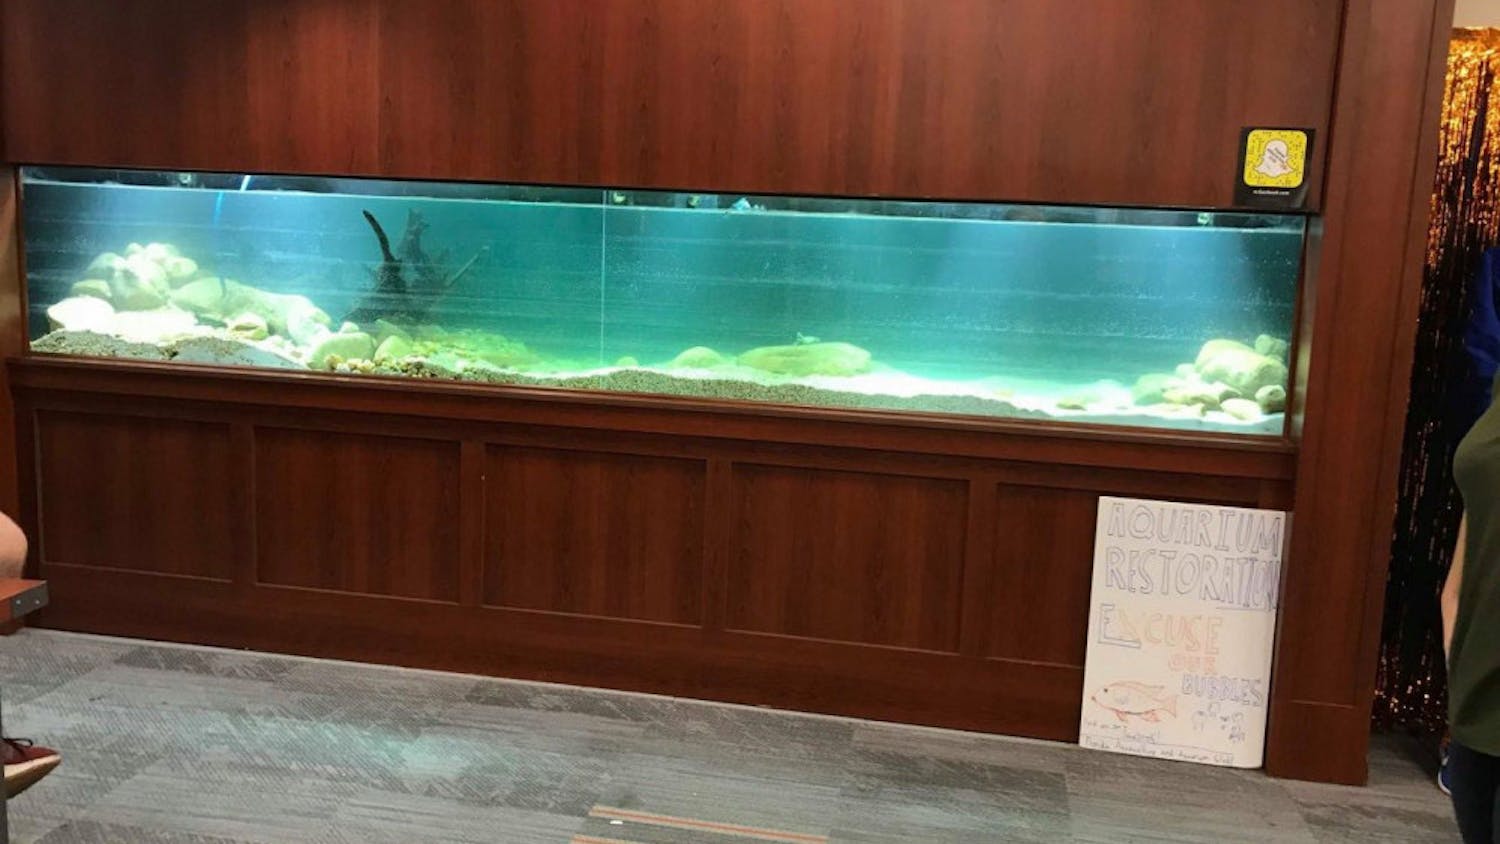 Members of UF's Florida Aquaculture and Aquarium Club are renovating the 500-gallon fish tank in the UF Reitz Union Bookstore.